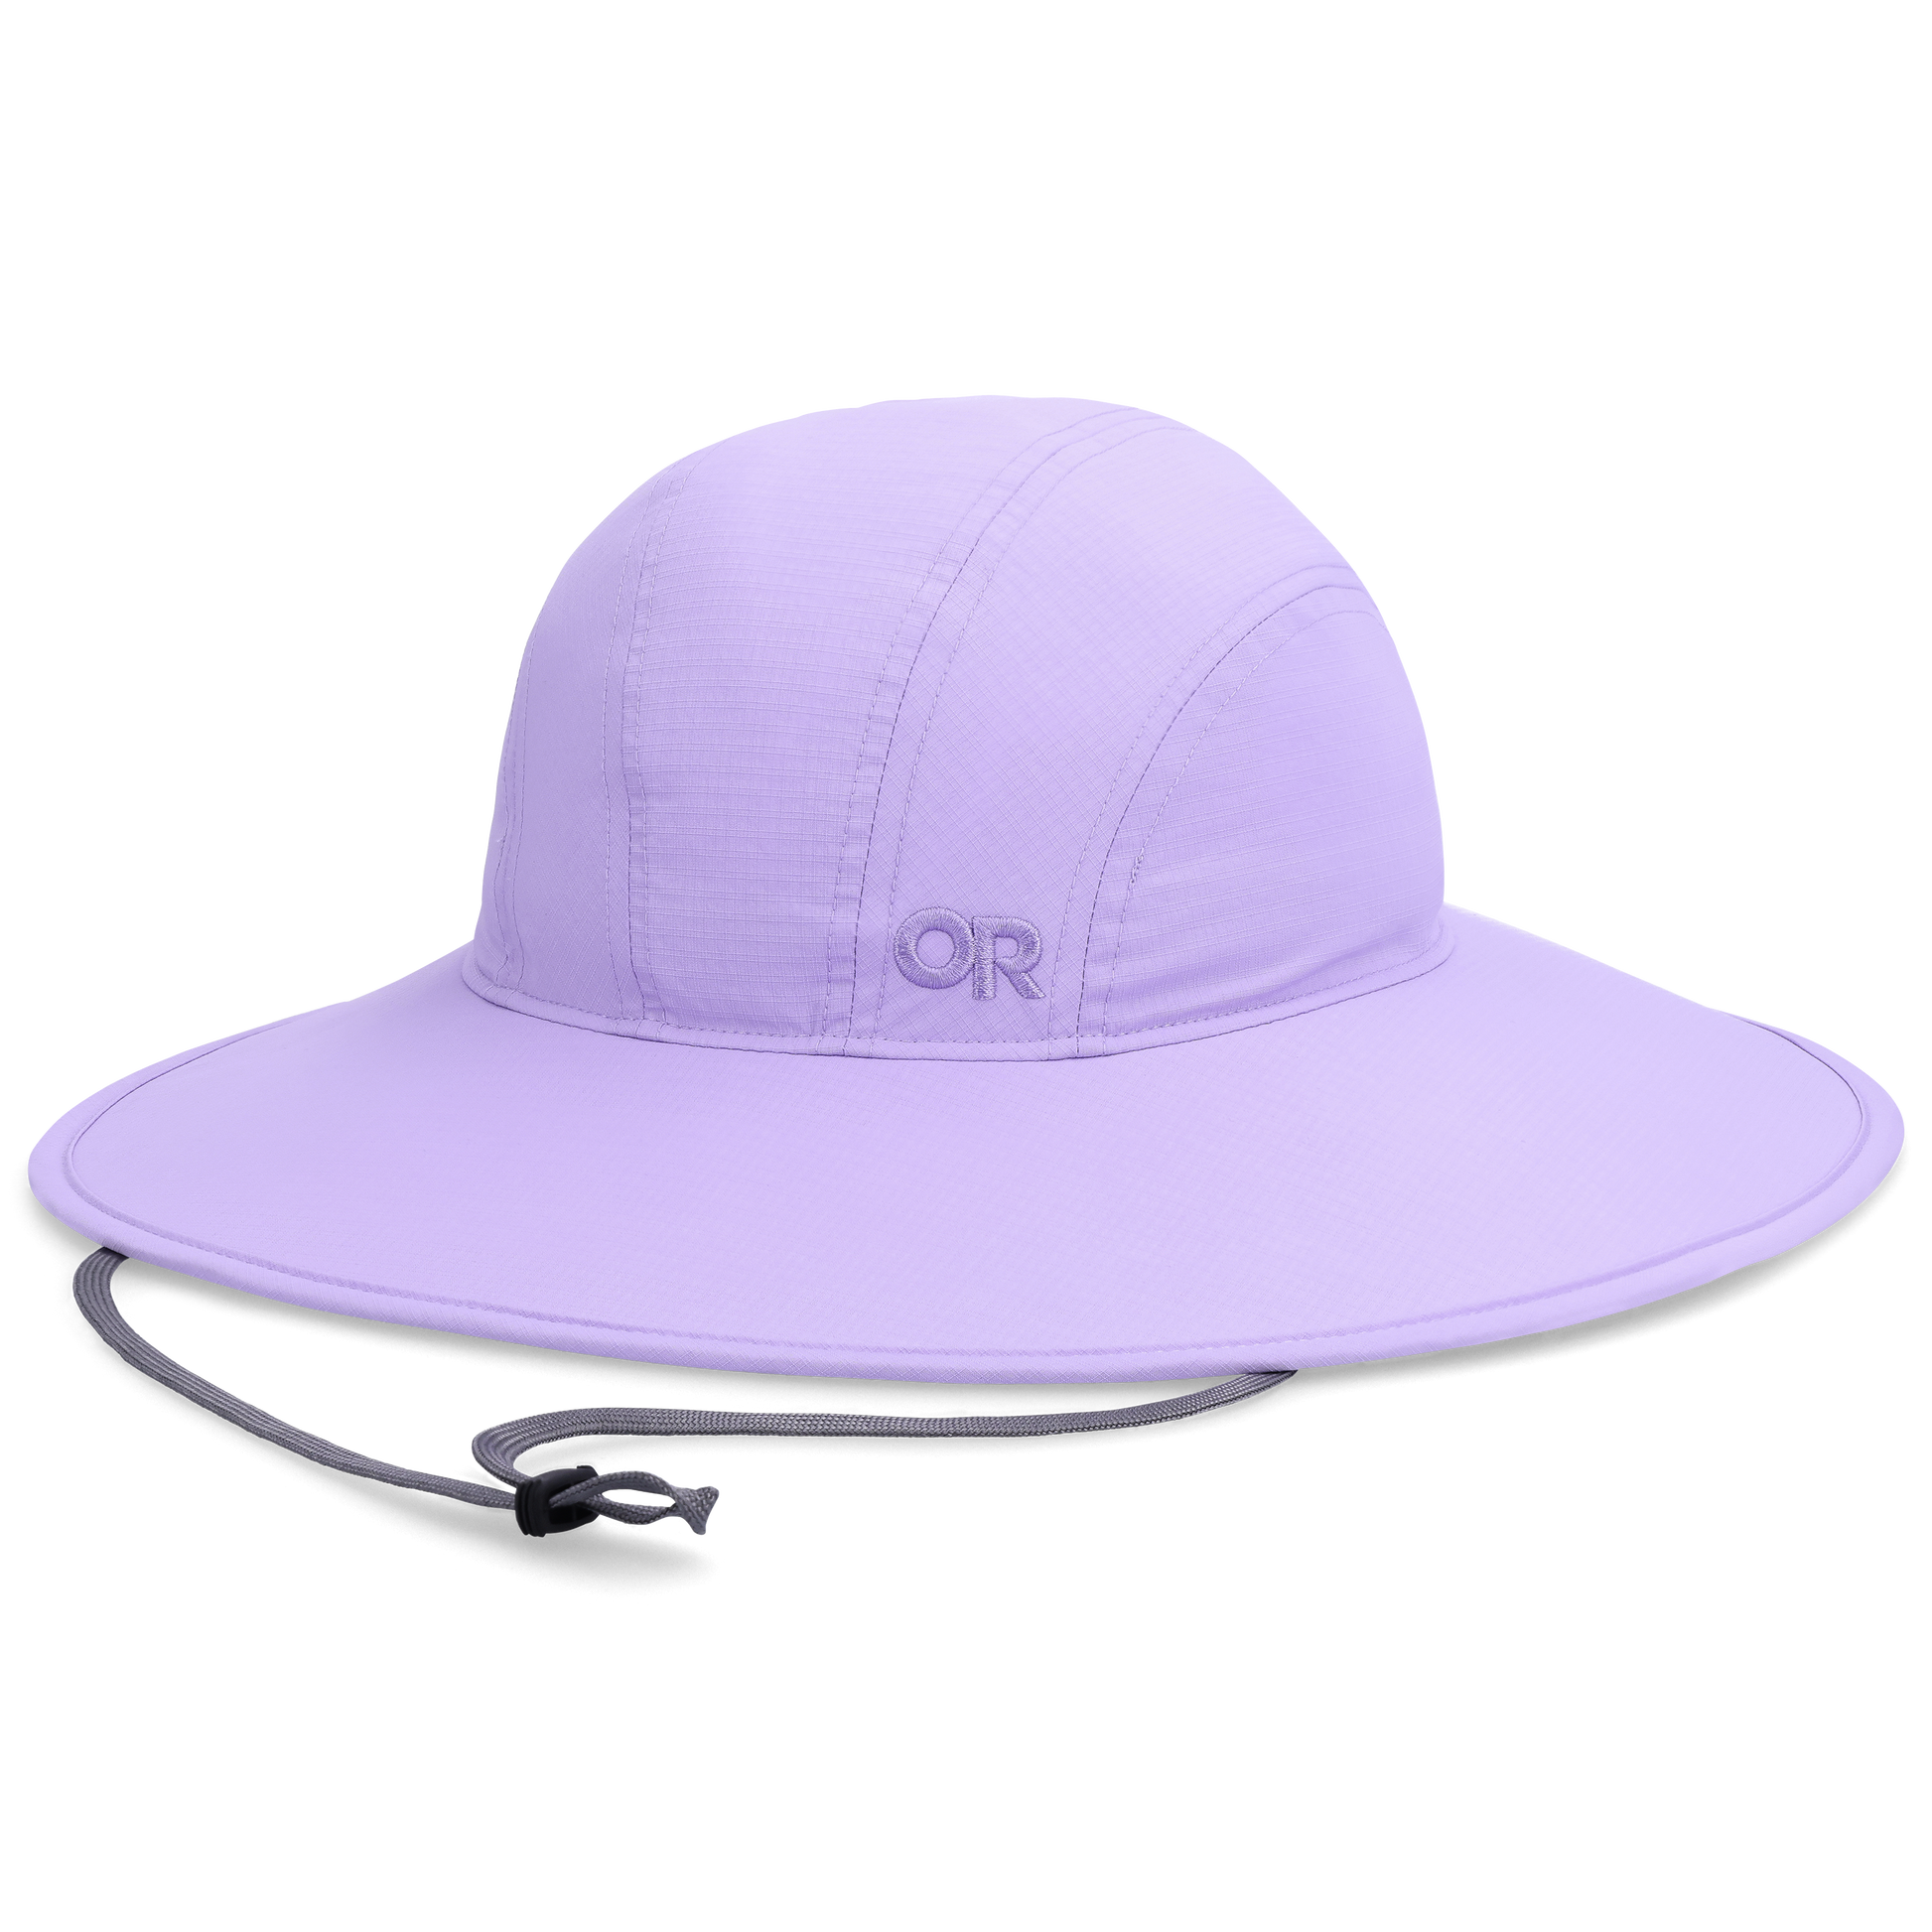 Outdoor Research Women's Oasis Sun Hat - Lavender